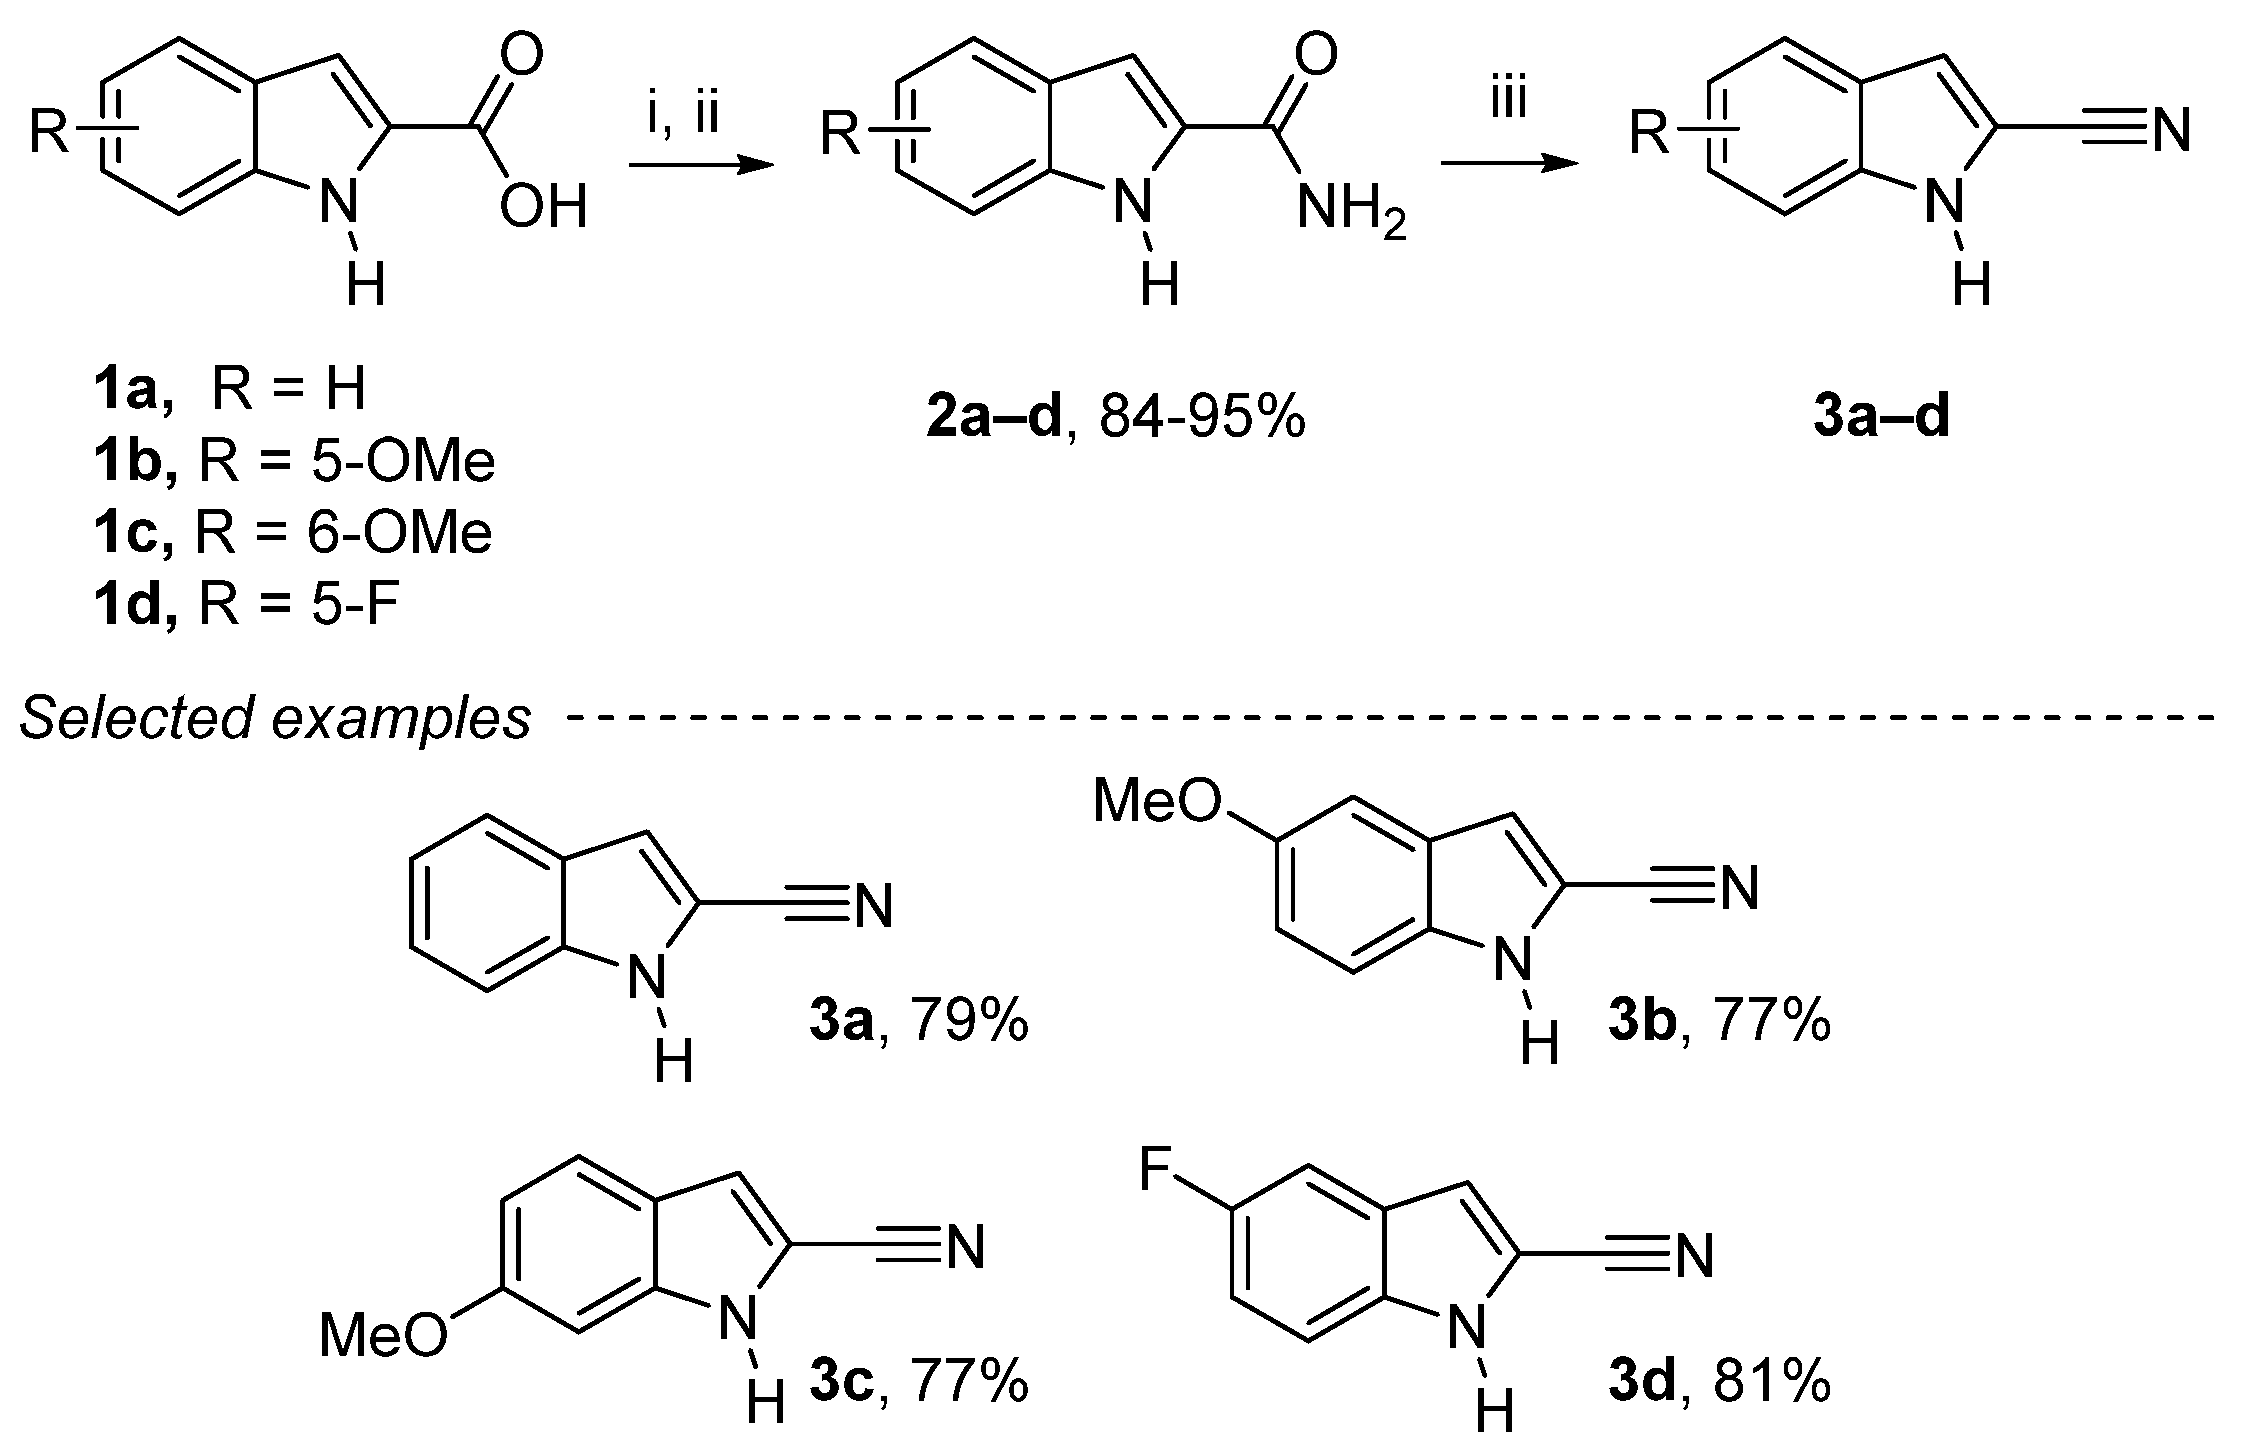 Ch chcl. Бензольная кислота socl2. Янтарная кислота socl2. Ацетон socl2. Амин+socl2.